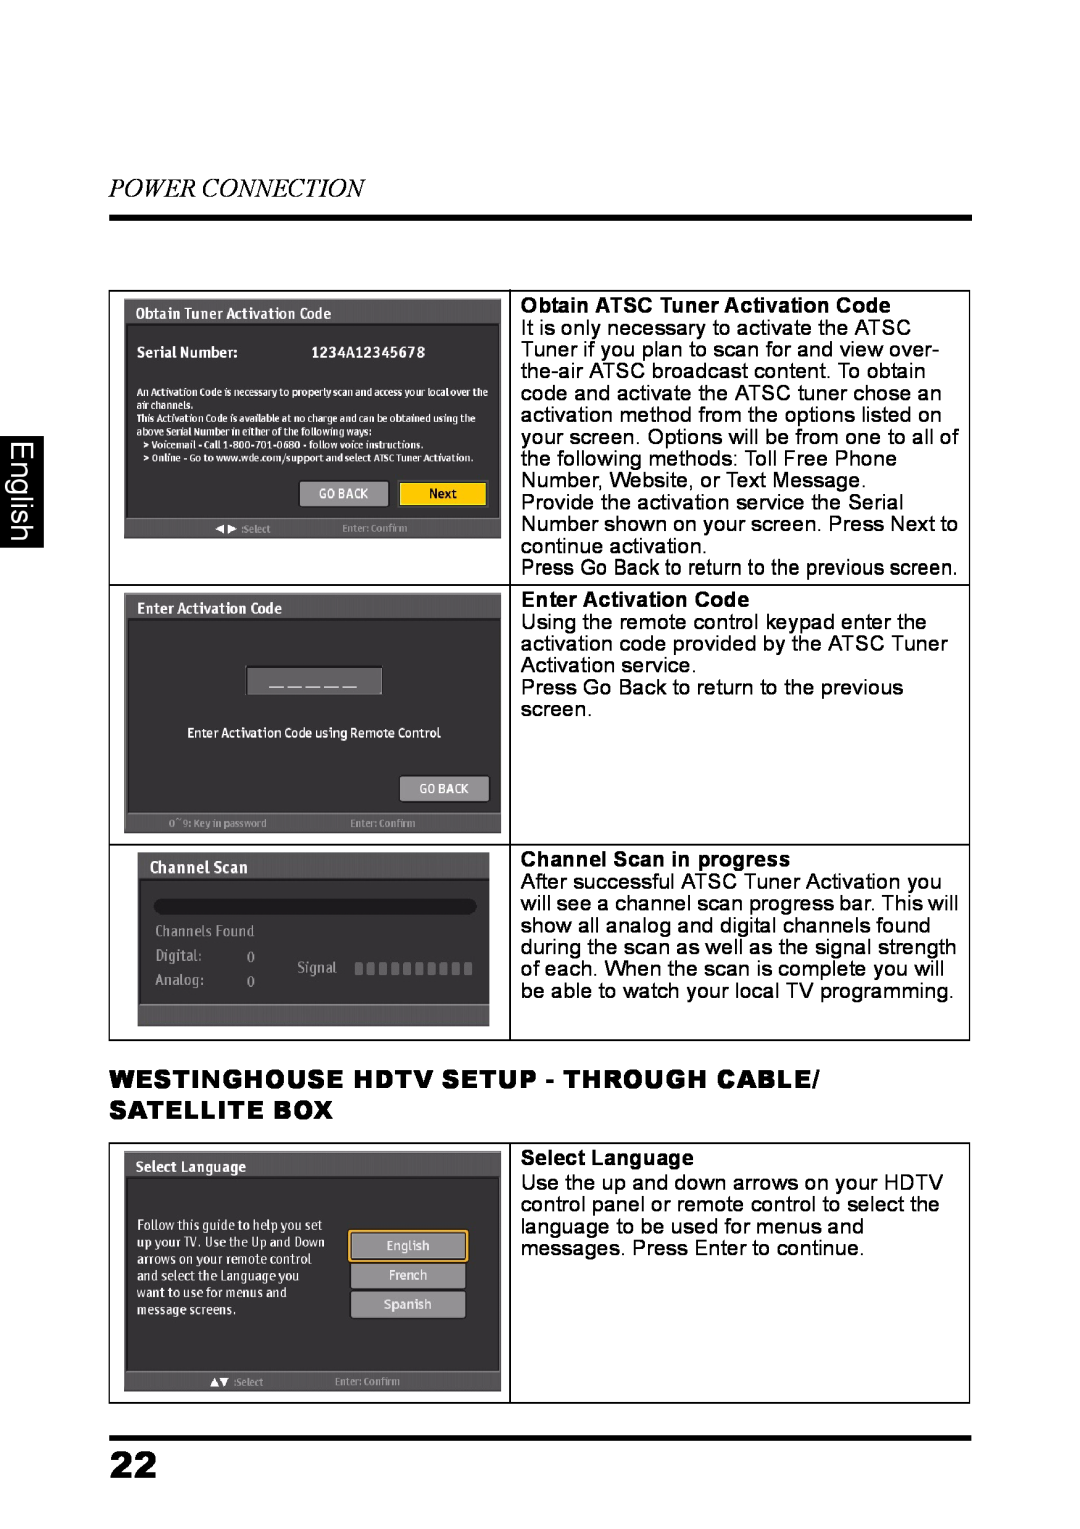 Westinghouse LD-3237 user manual English, Power Connection, Westinghouse Hdtv Setup - Through Cable/ Satellite Box 